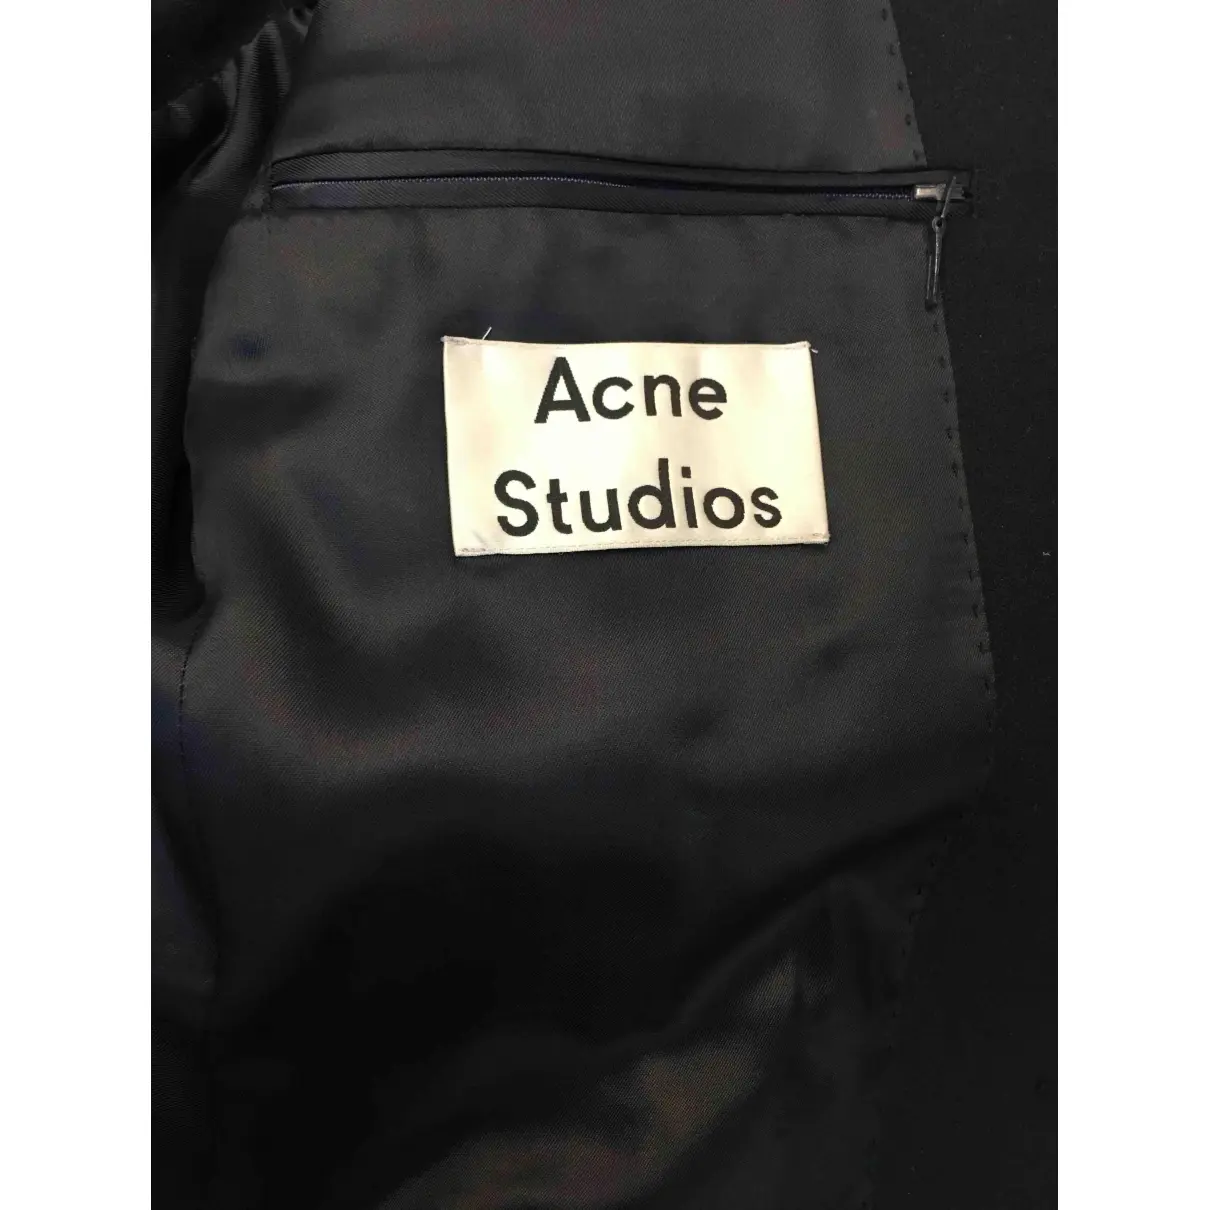 Buy Acne Studios Wool vest online